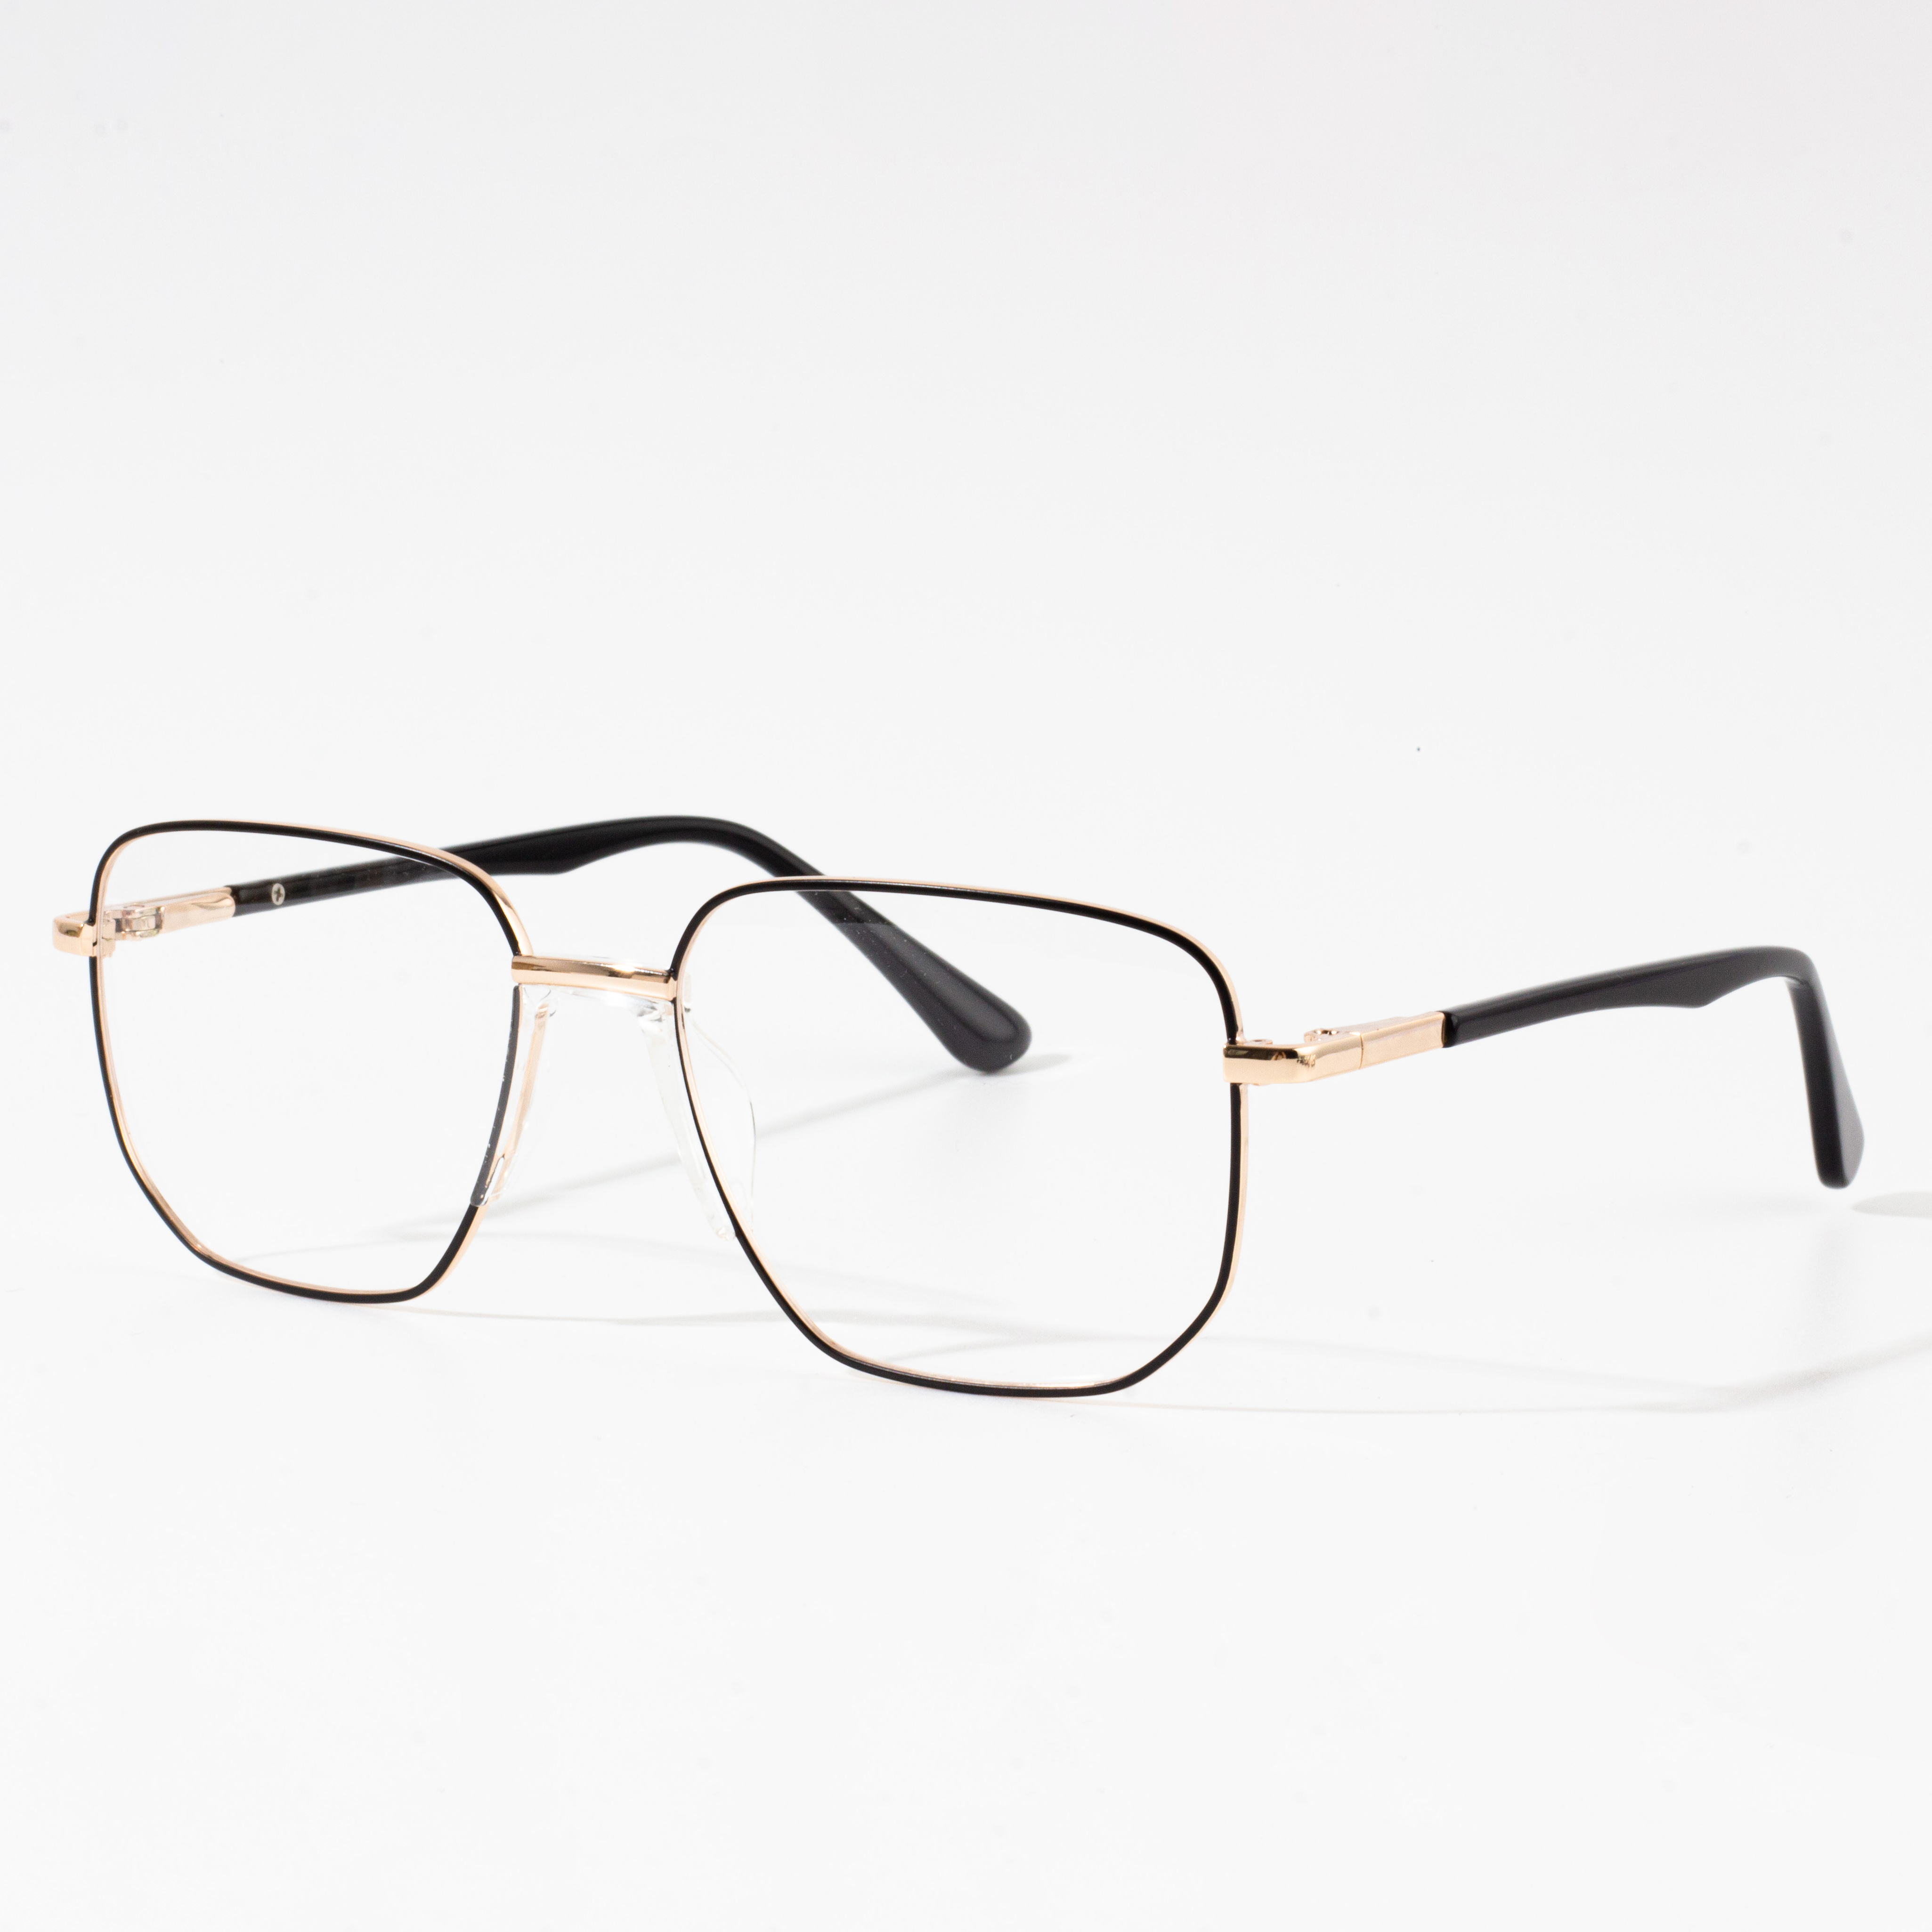 Titanium Glasses Frame (11)